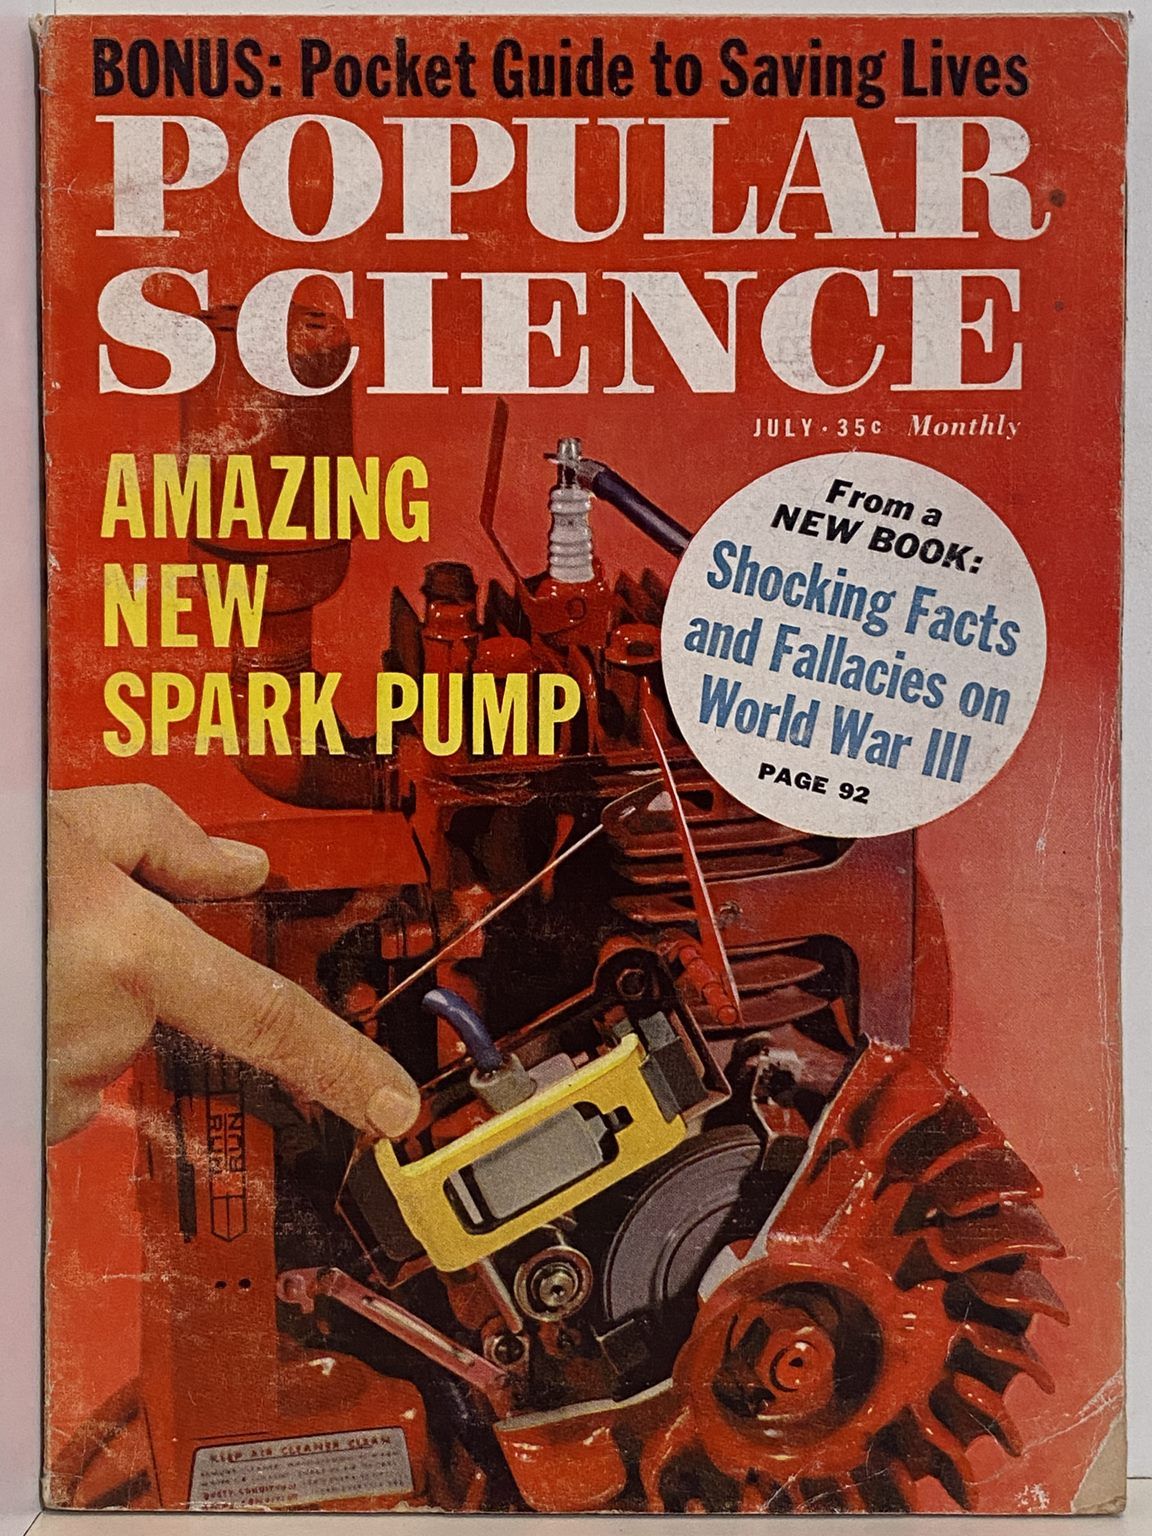 VINTAGE MAGAZINE: Popular Science, Vol. 179, No. 1 - July 1961